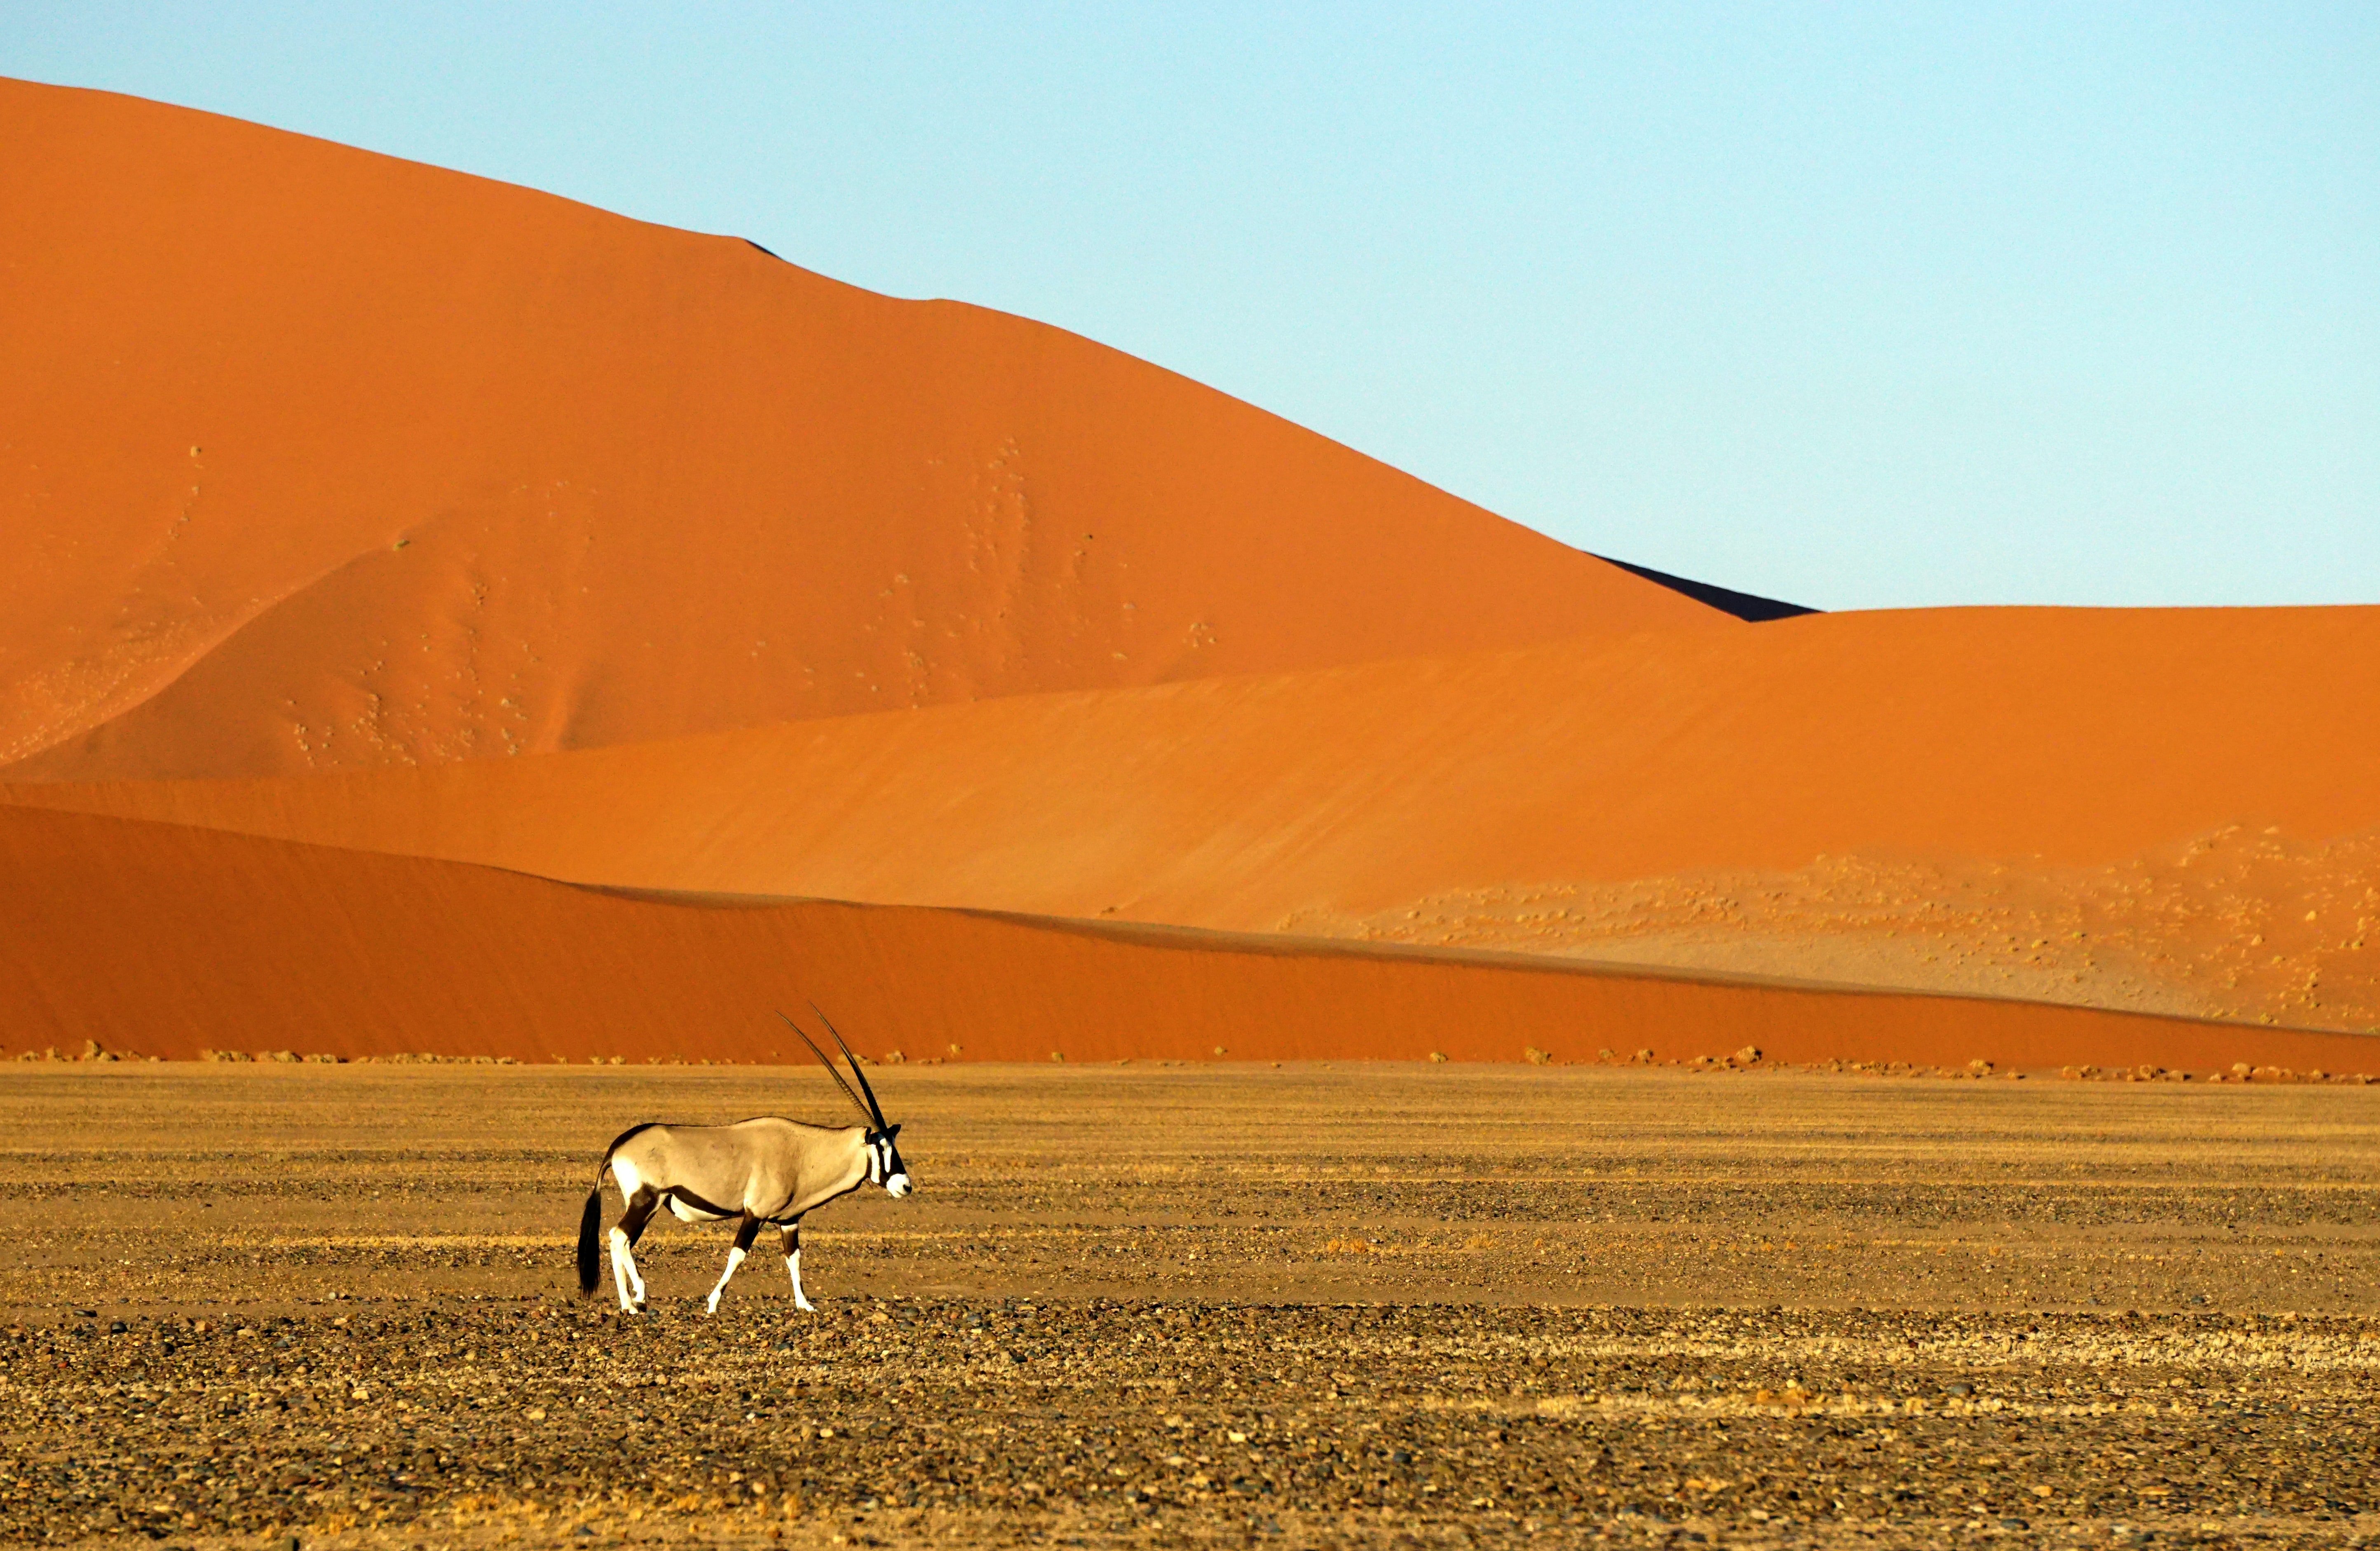 A gazelle walking in front of dunes in Africa